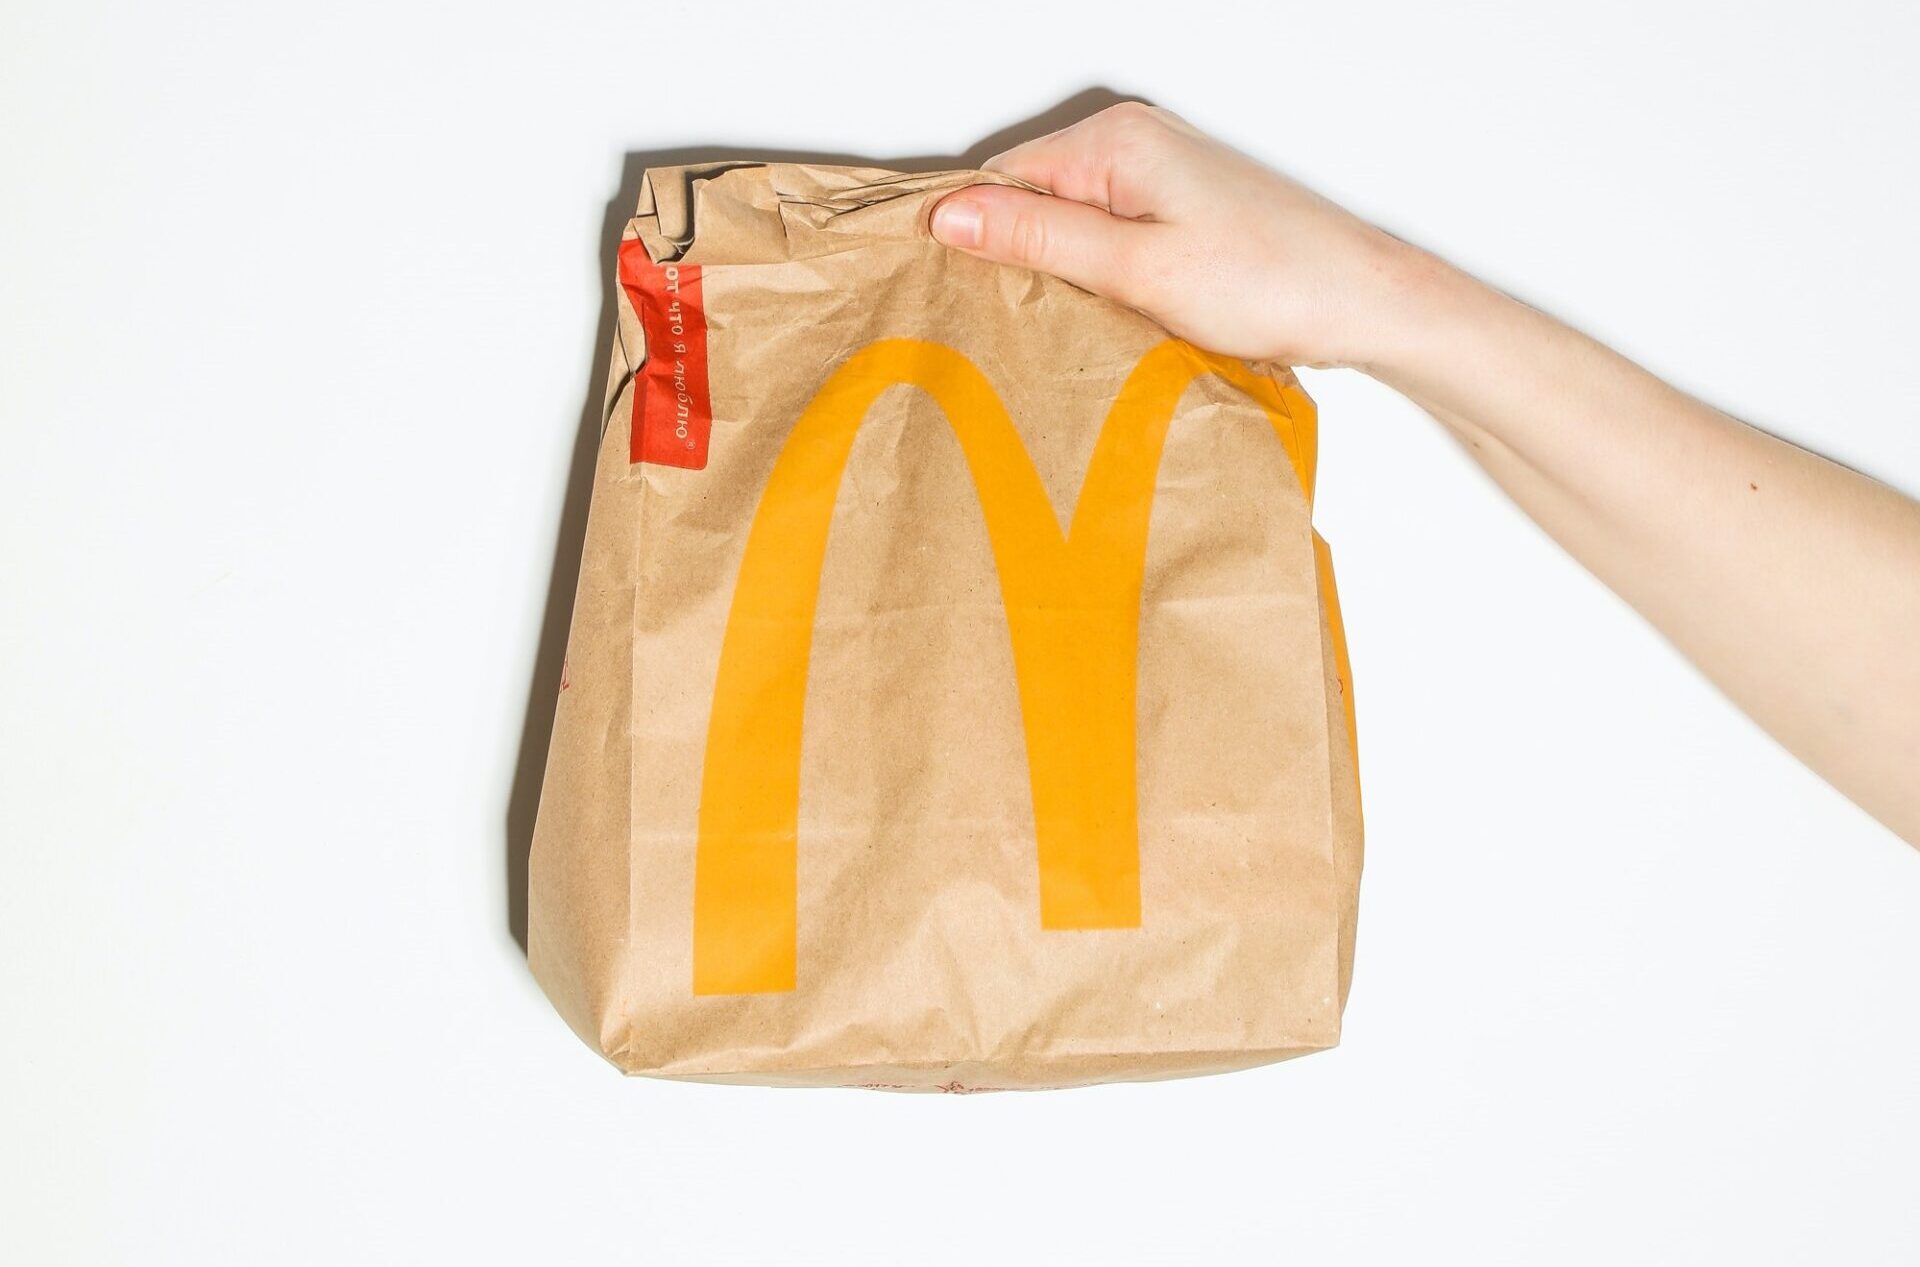 Bag of McDonald's food